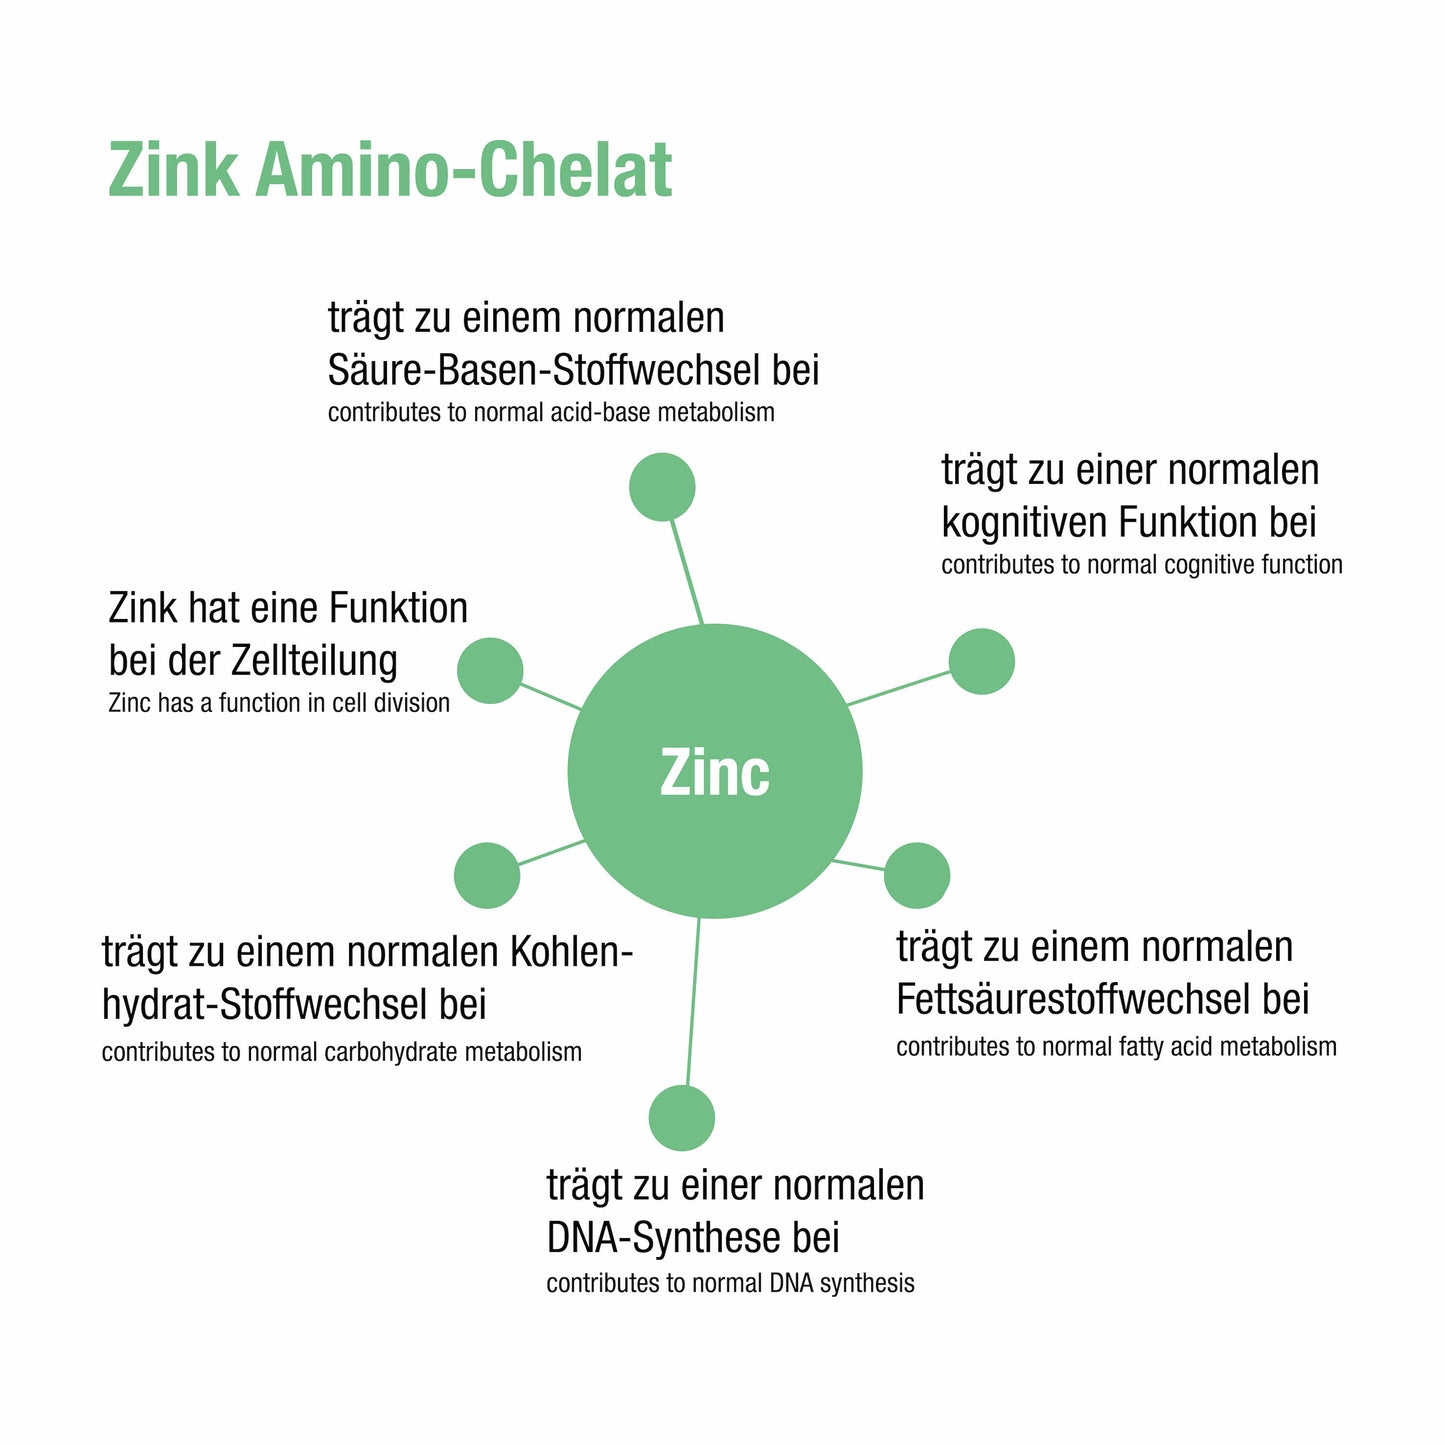 Zink Amino-Chelat - 240 vegane Tabletten